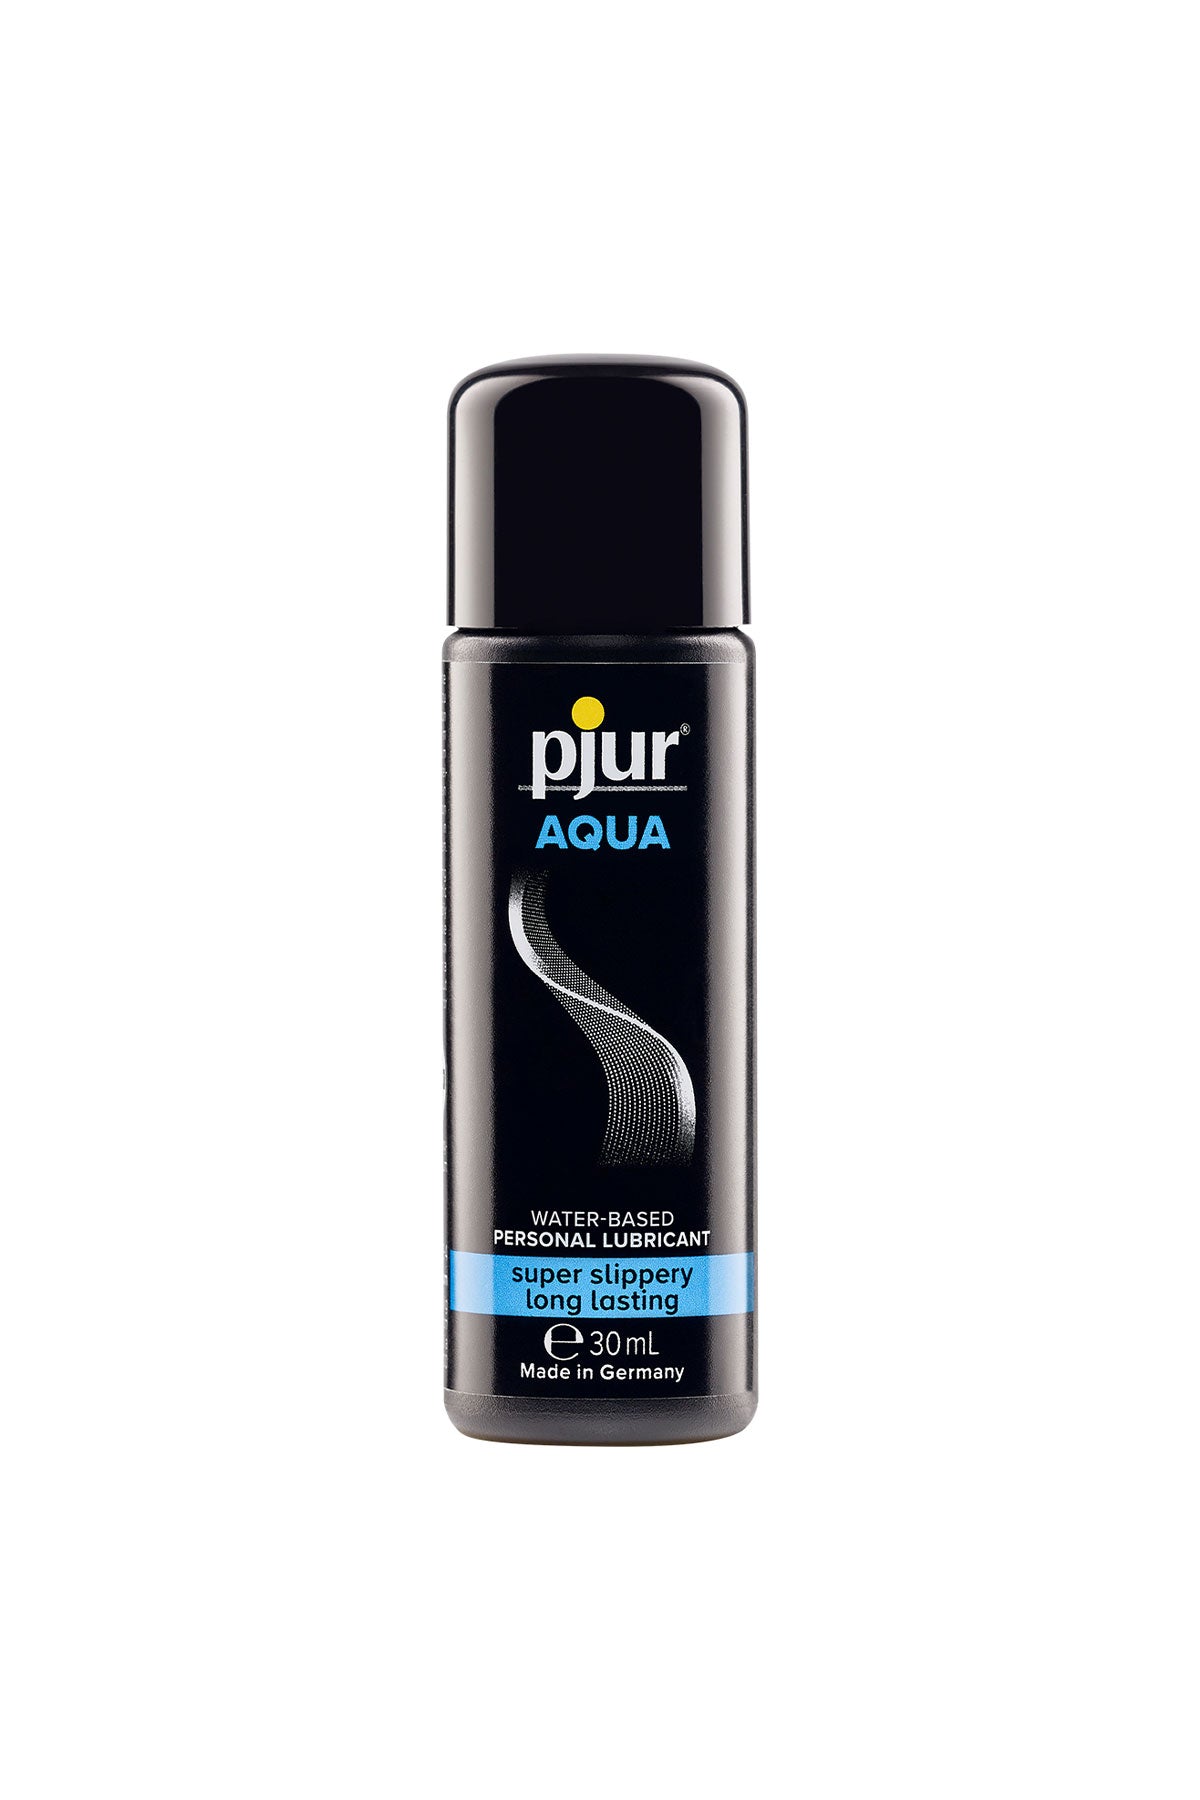 pjur Aqua Water-based Lubricant 30ml | Matilda's